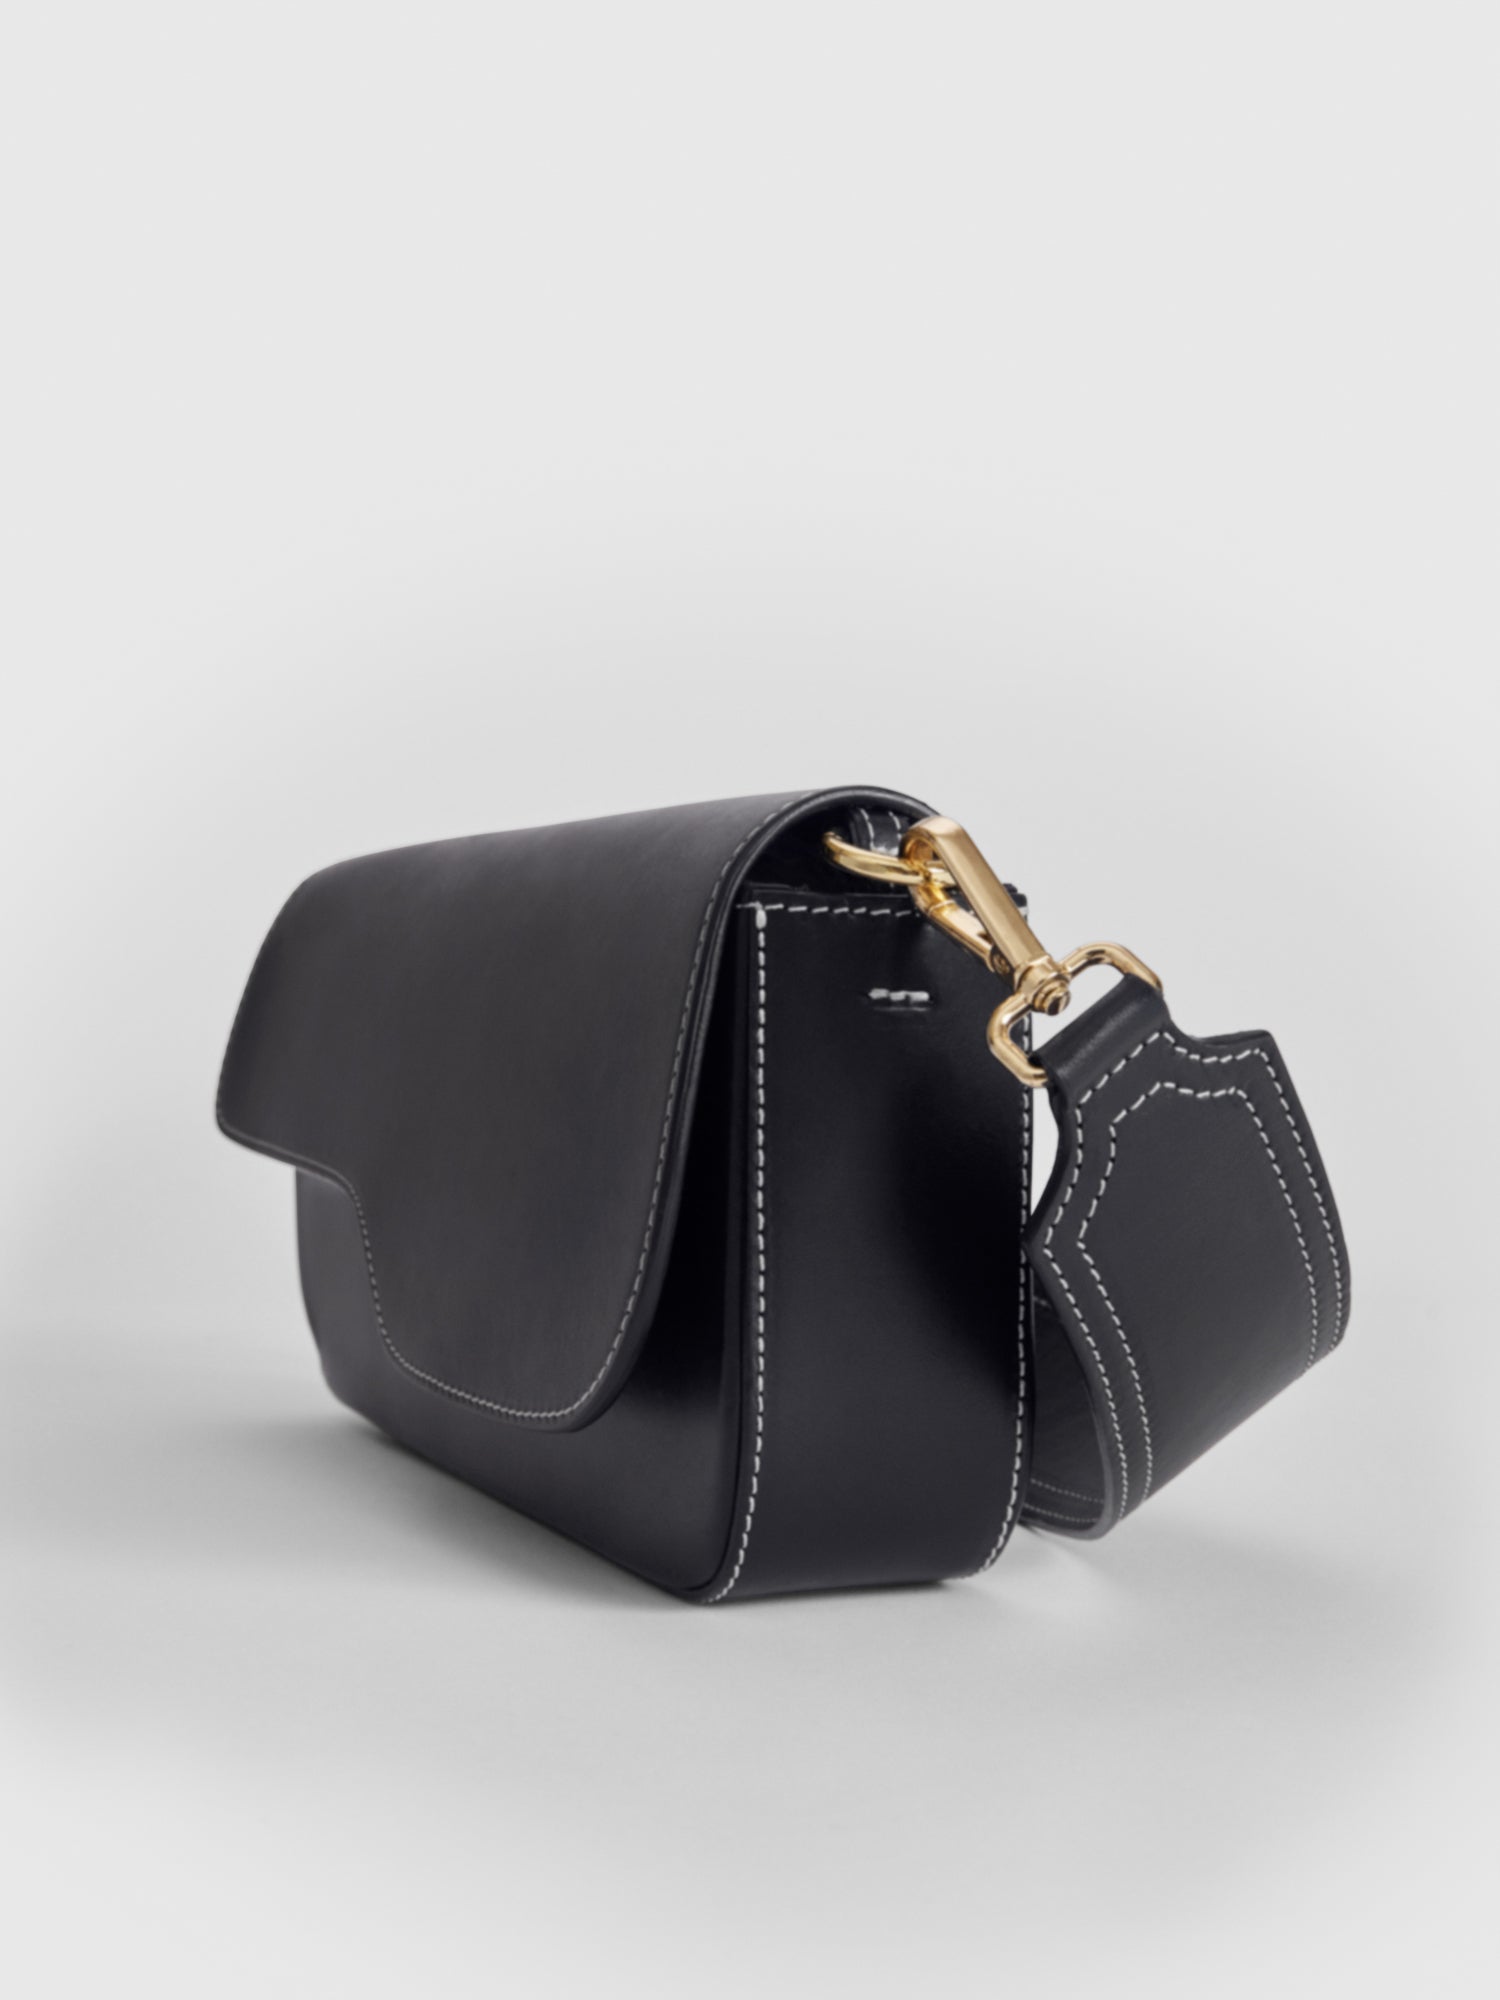 Ercolano Black/Contrast stitch Leather Shoulder bag